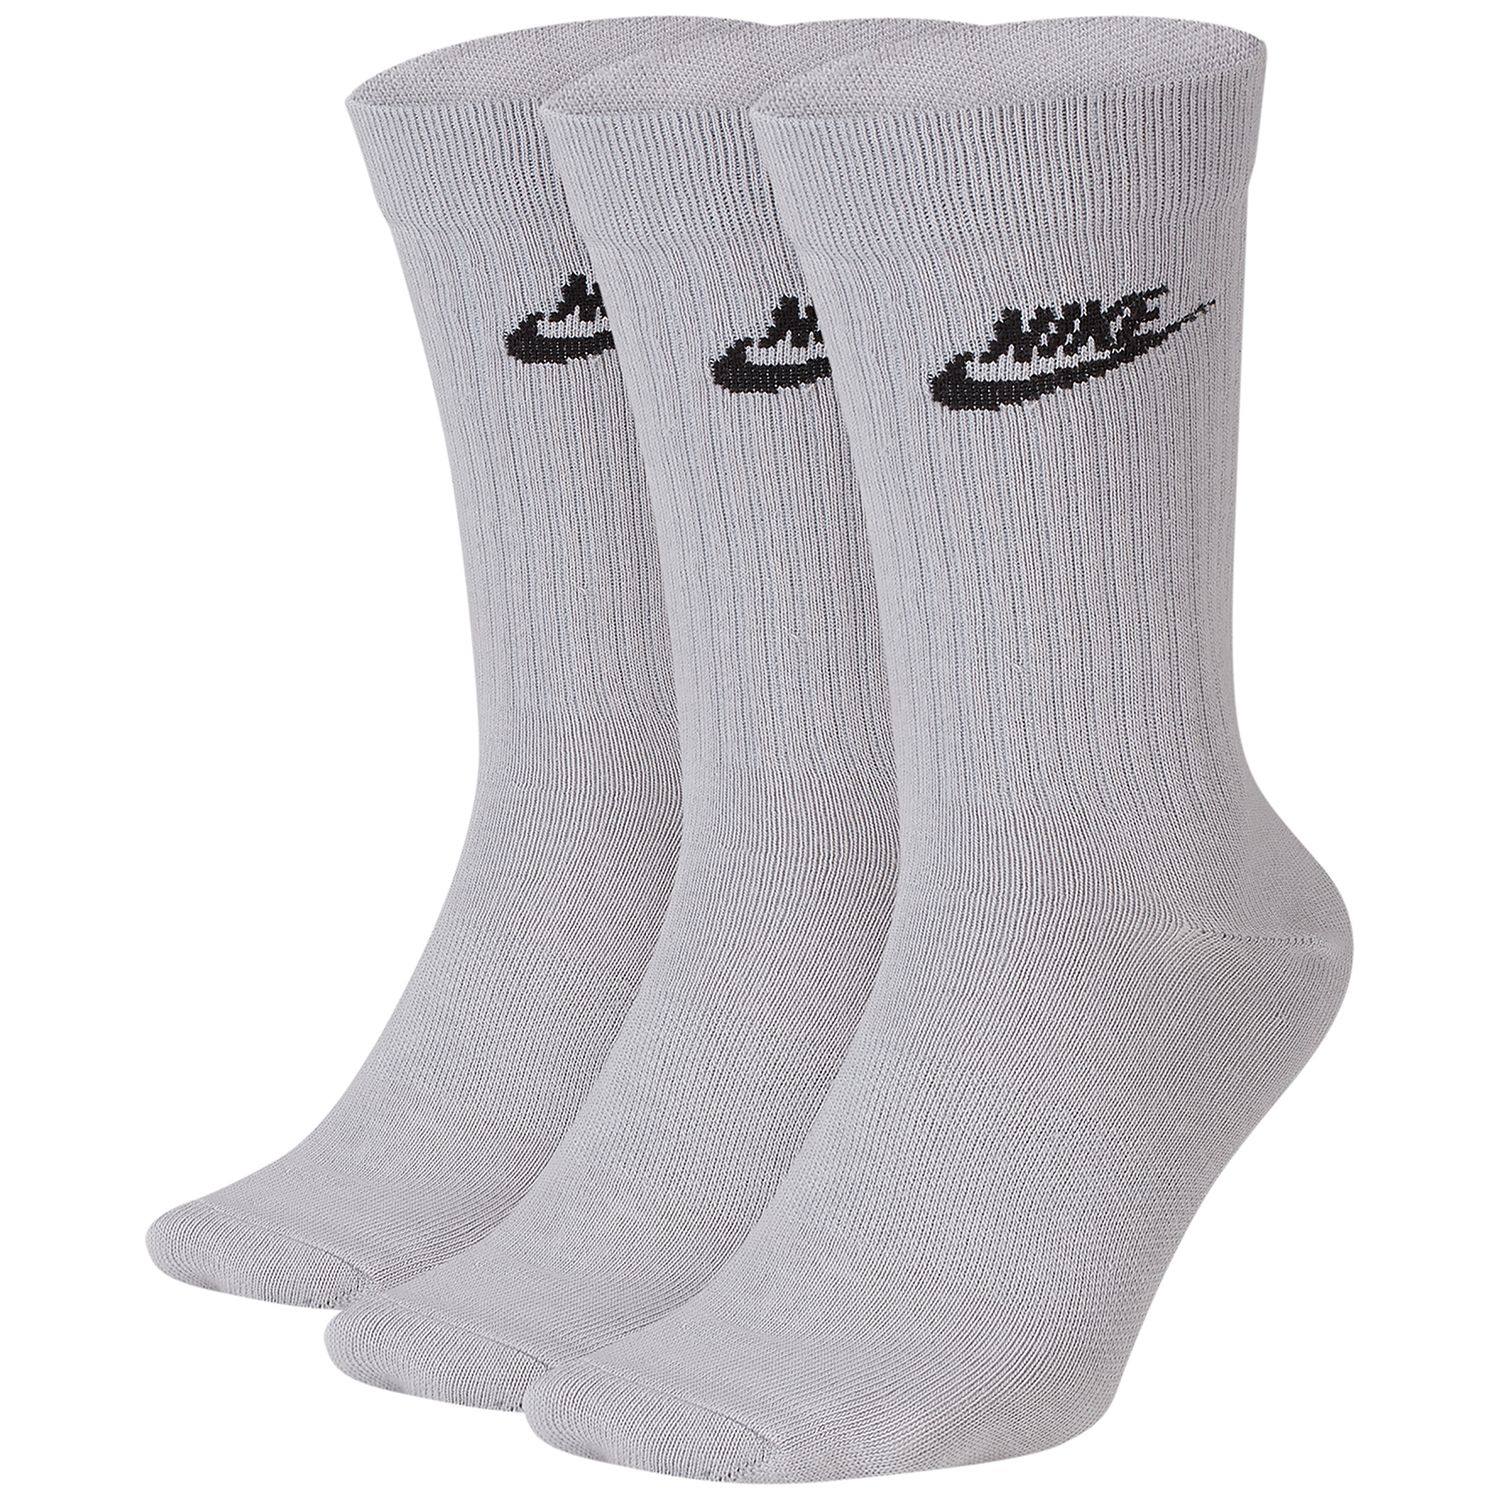 Men's Nike Everyday Essential Crew Socks